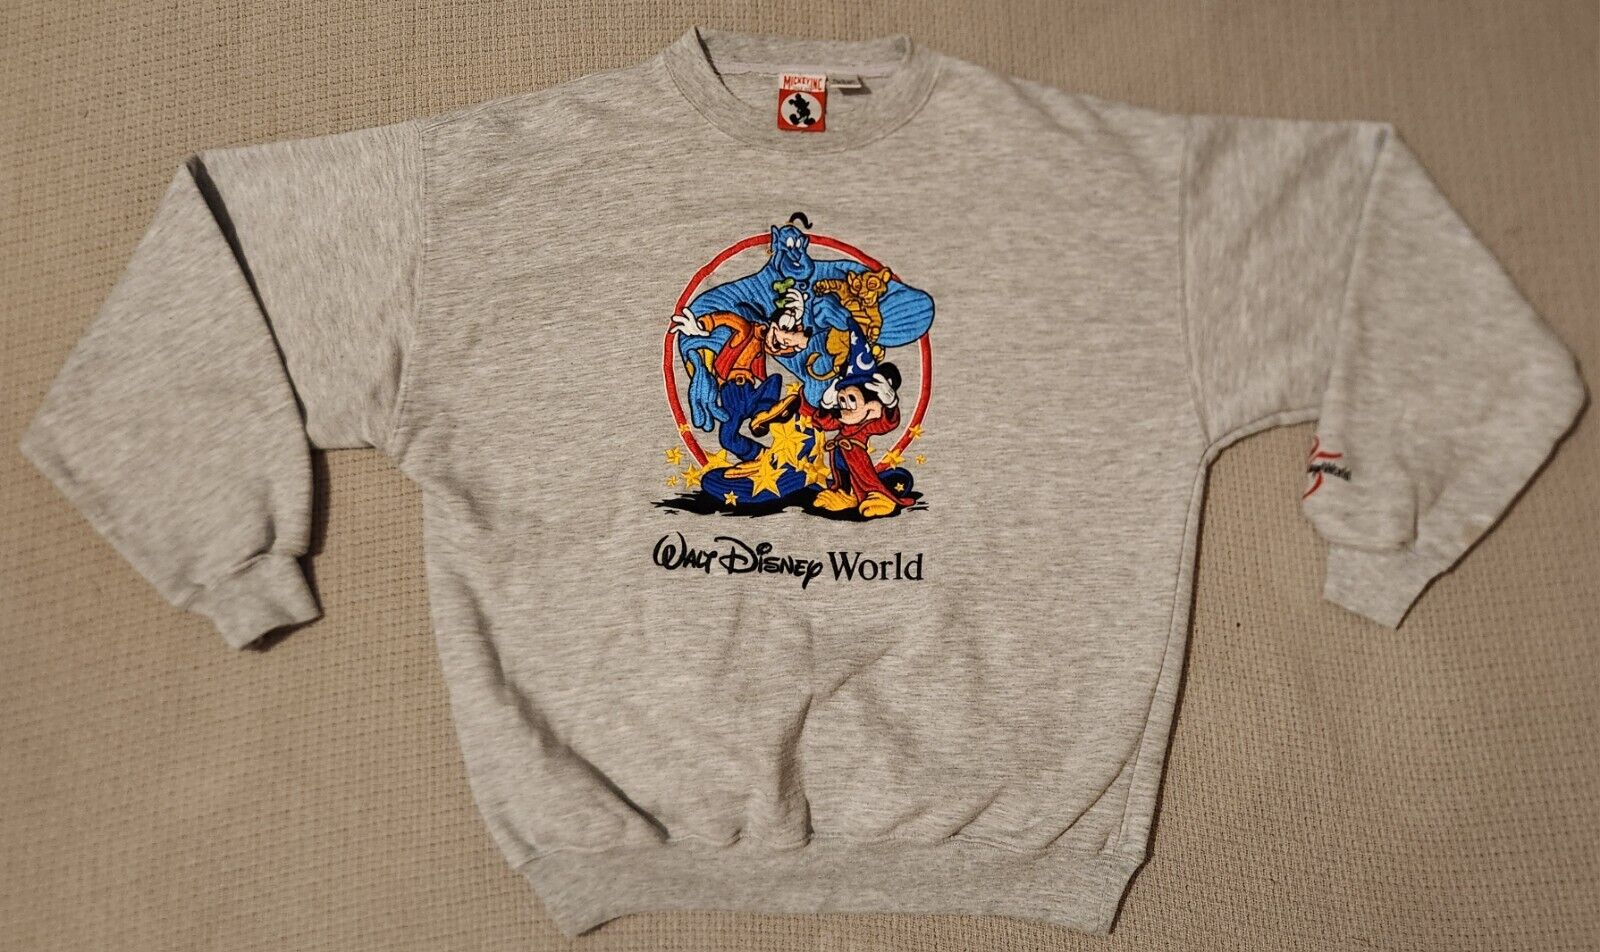 Vtg Walt Disney World 25th Anniversary Sweatshirt Embroidered Genie Simba Large